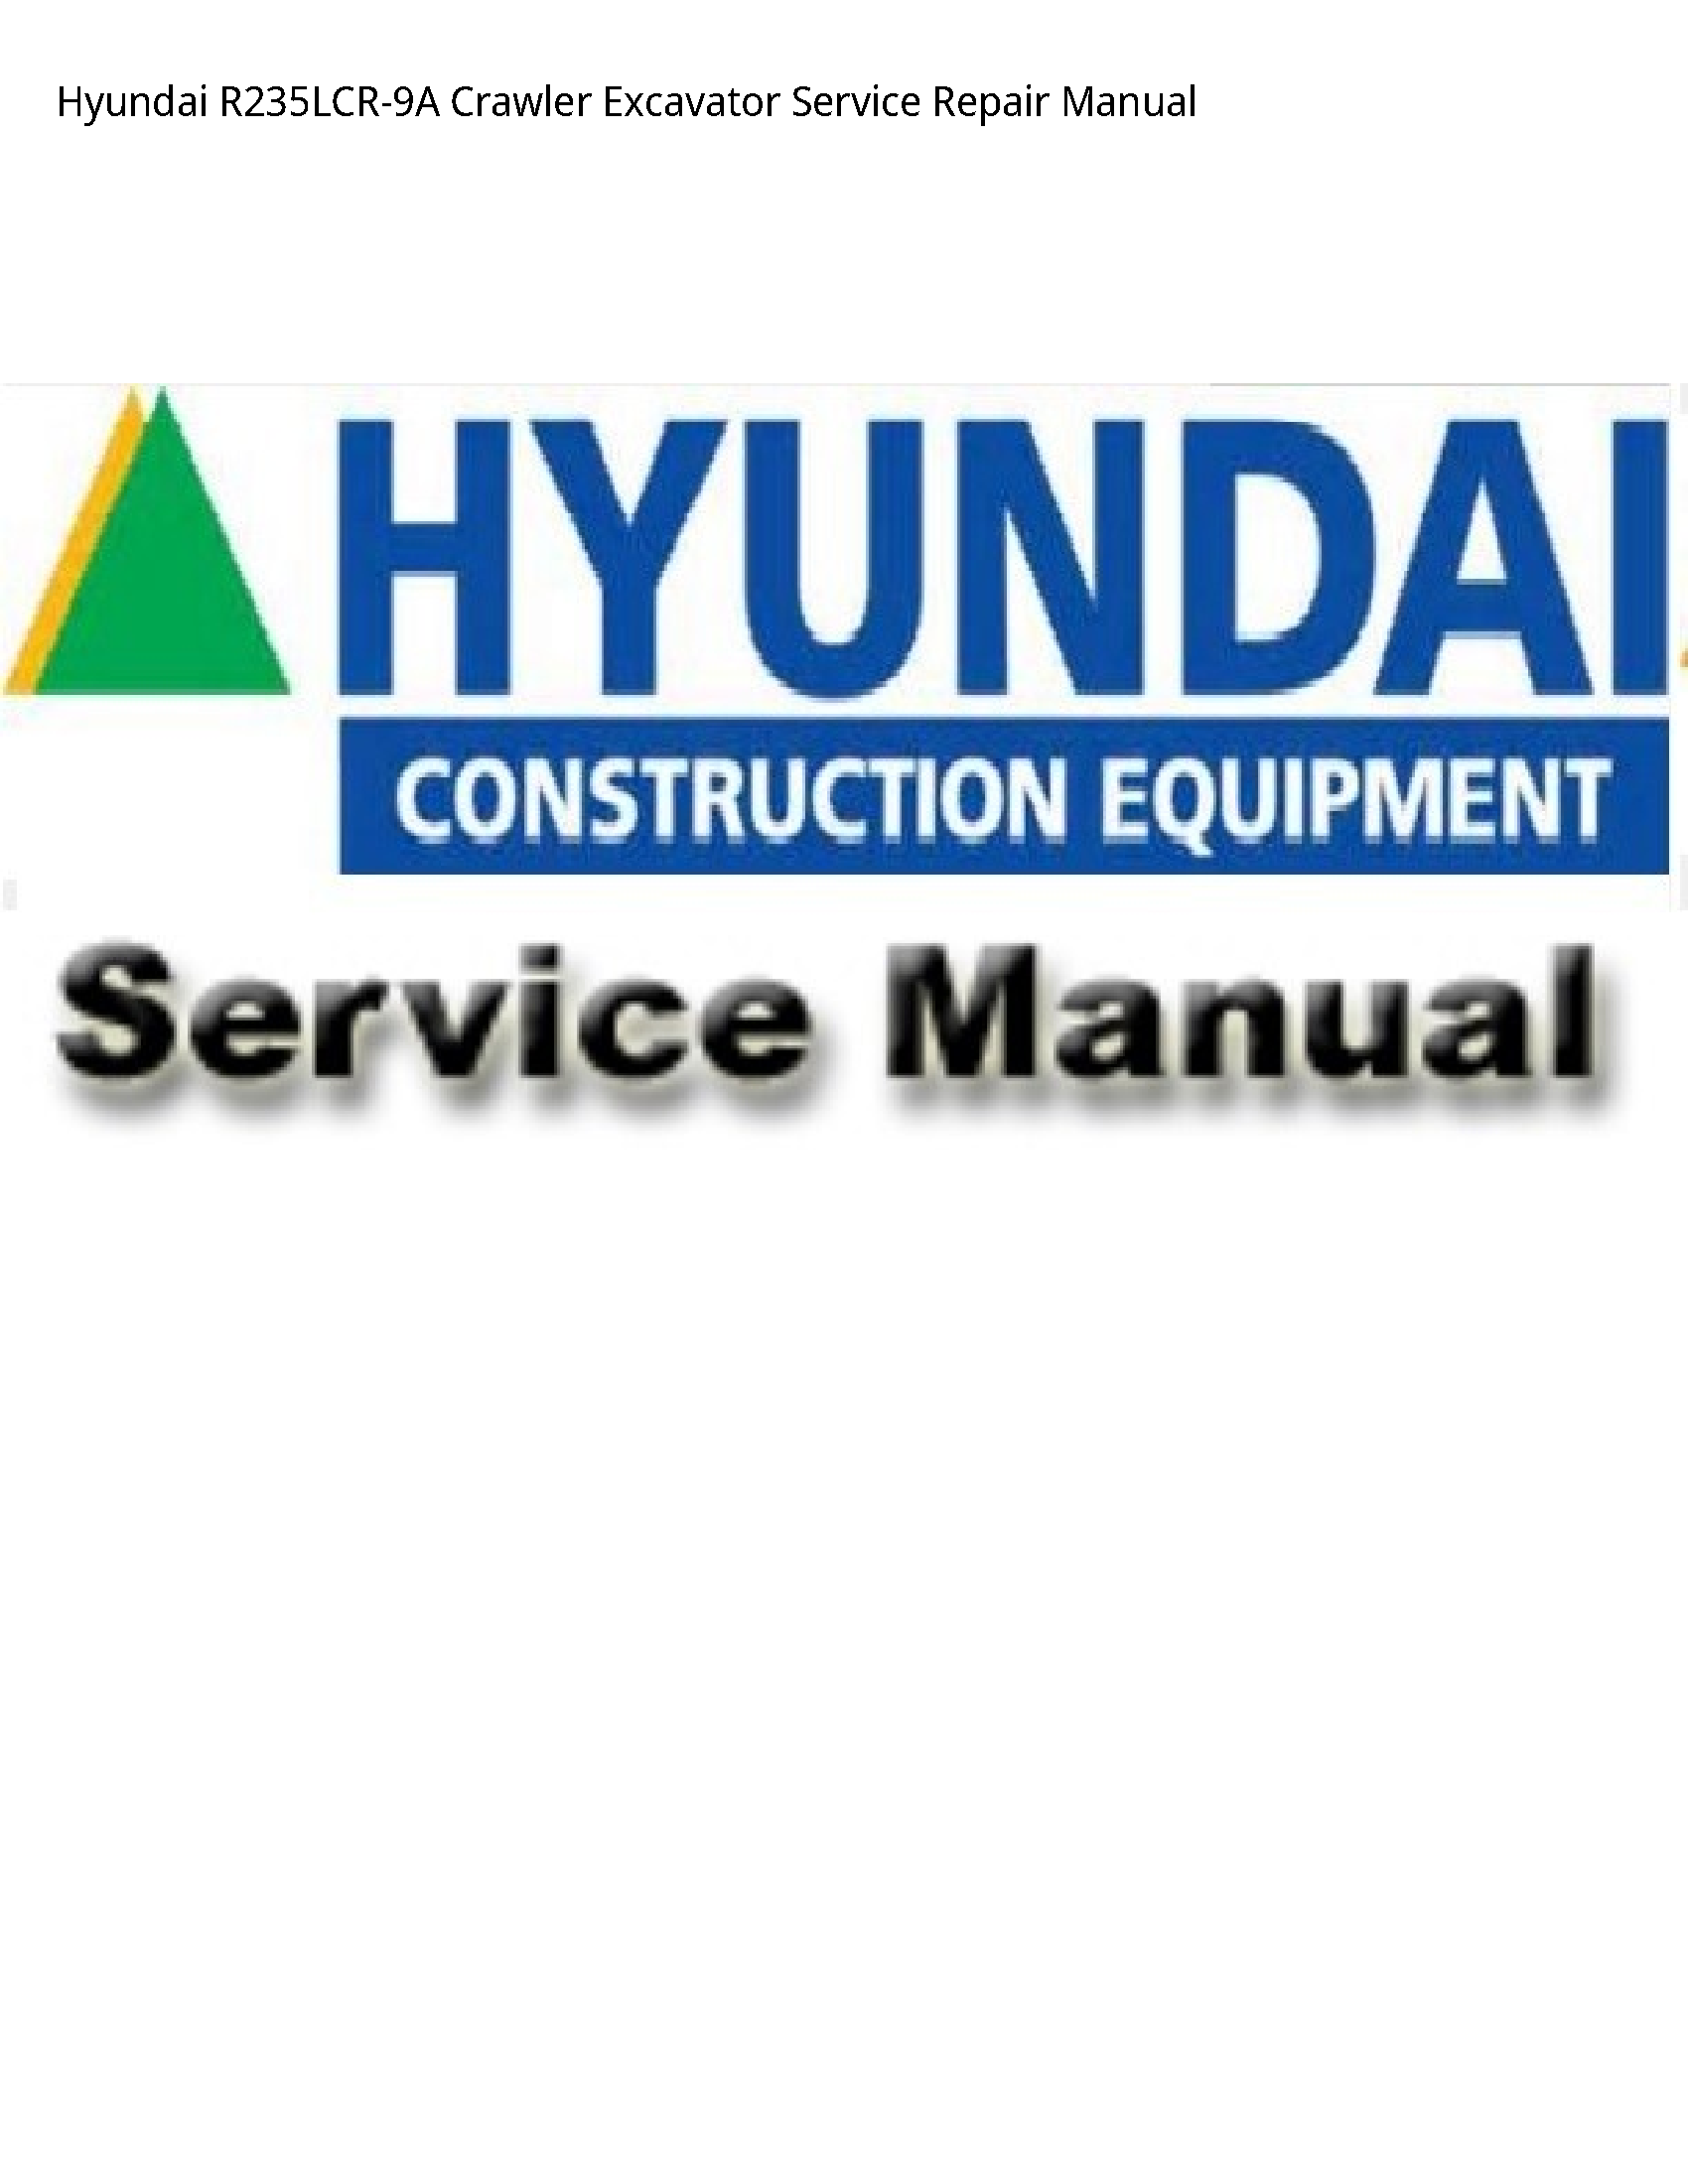 Hyundai R235LCR-9A Crawler Excavator manual